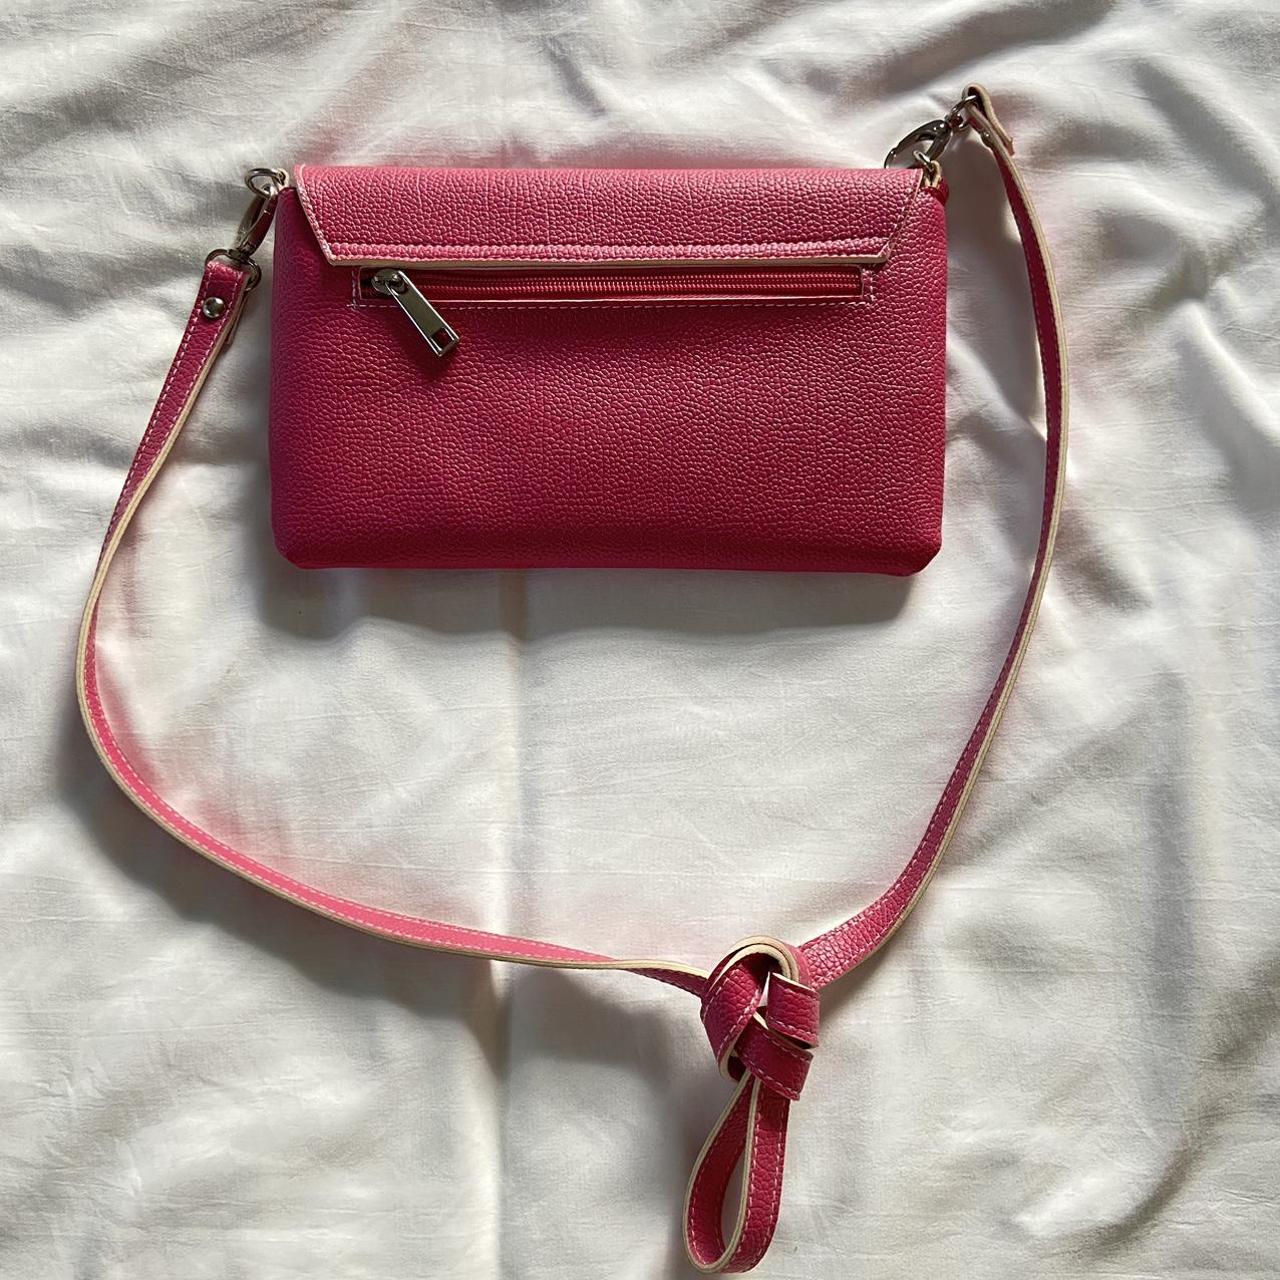 Avon Women's Floral Purse Handbag - Black / Pink / Teal | eBay